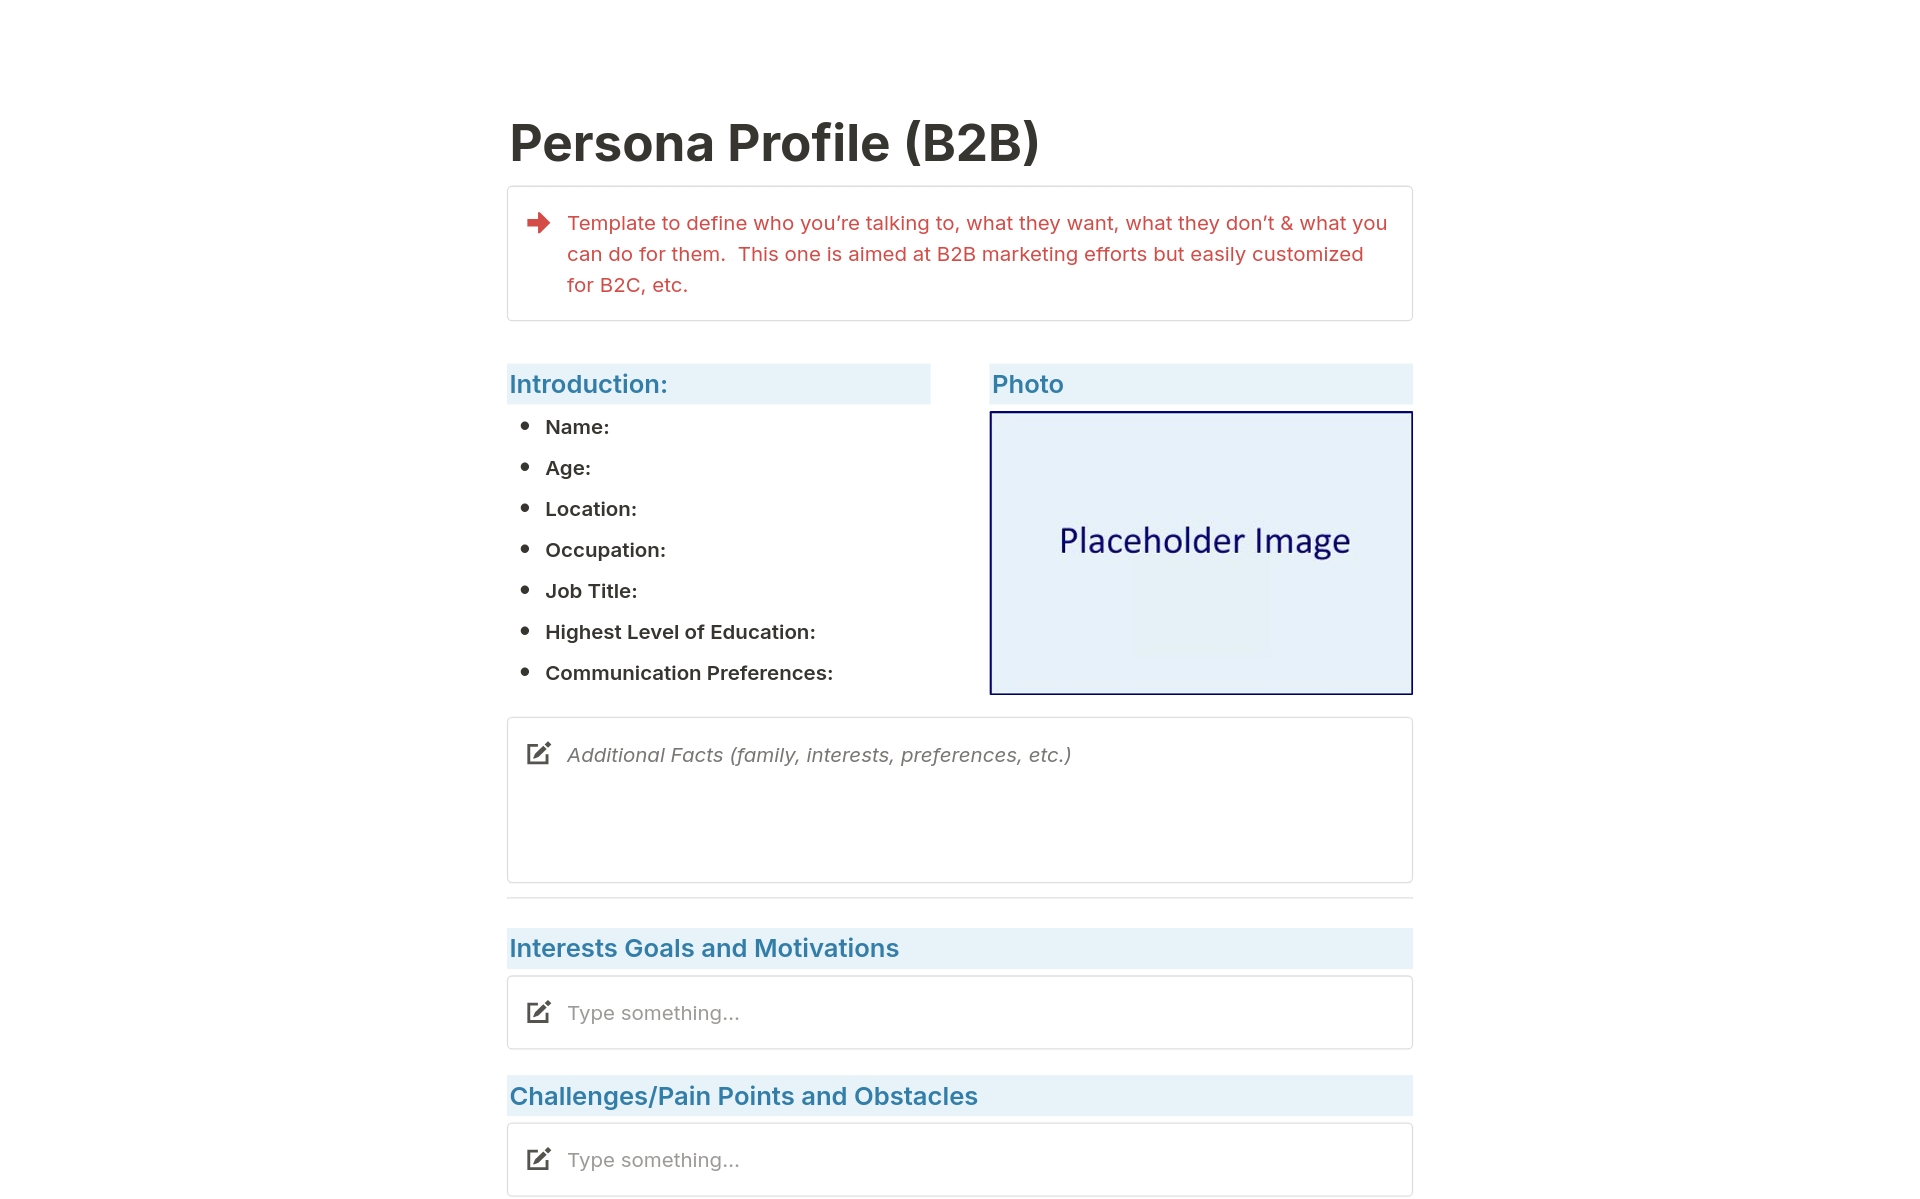 Persona Profile (B2B)님의 템플릿 미리보기